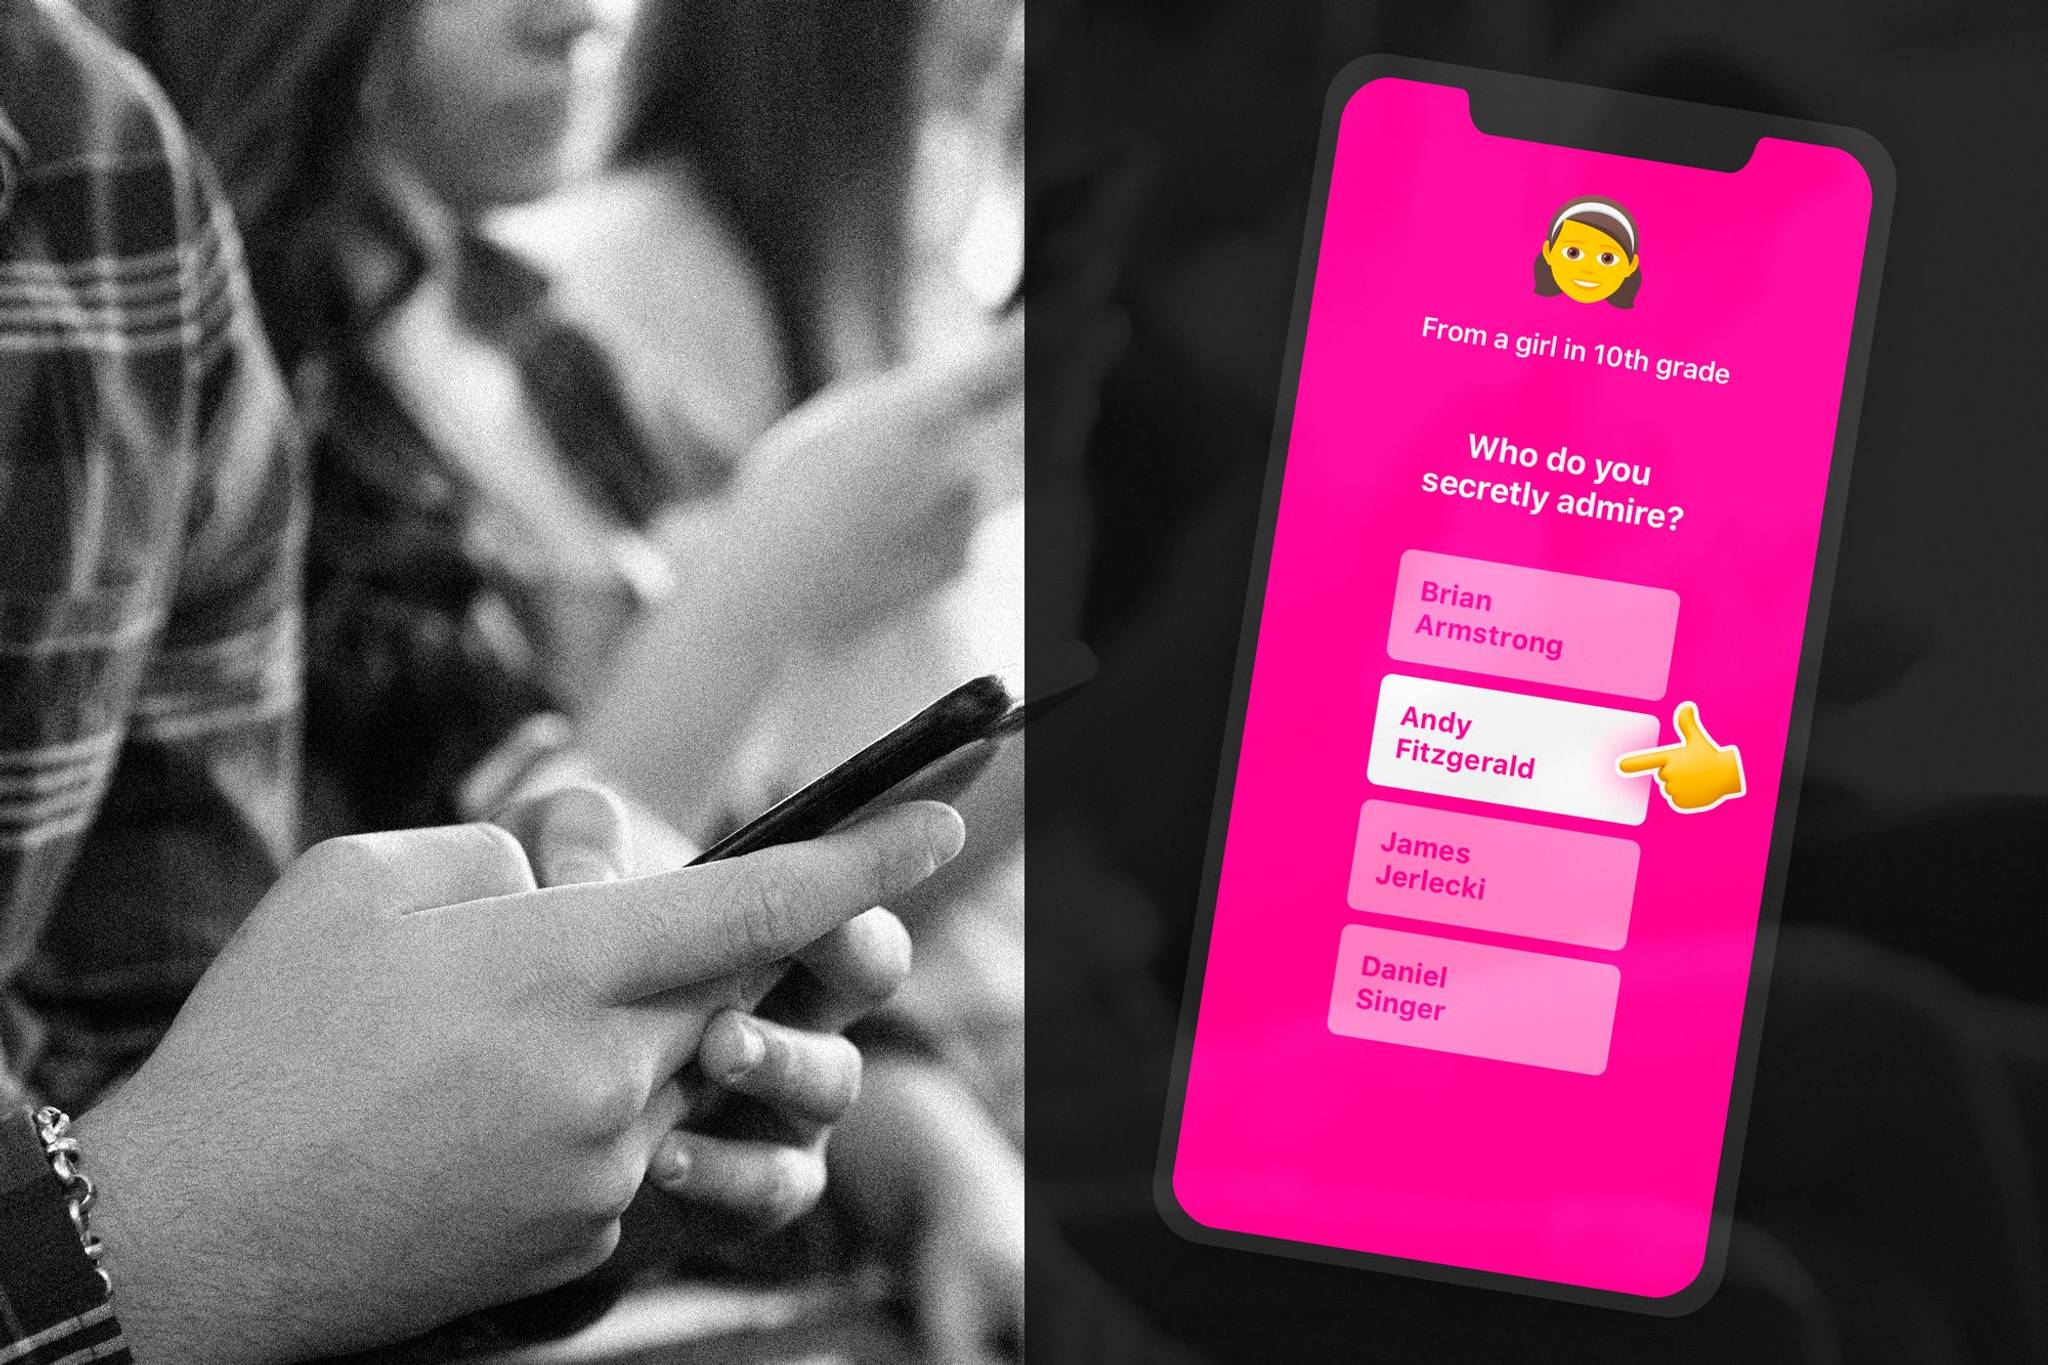 Gas app offers kind alternative to social media toxicity